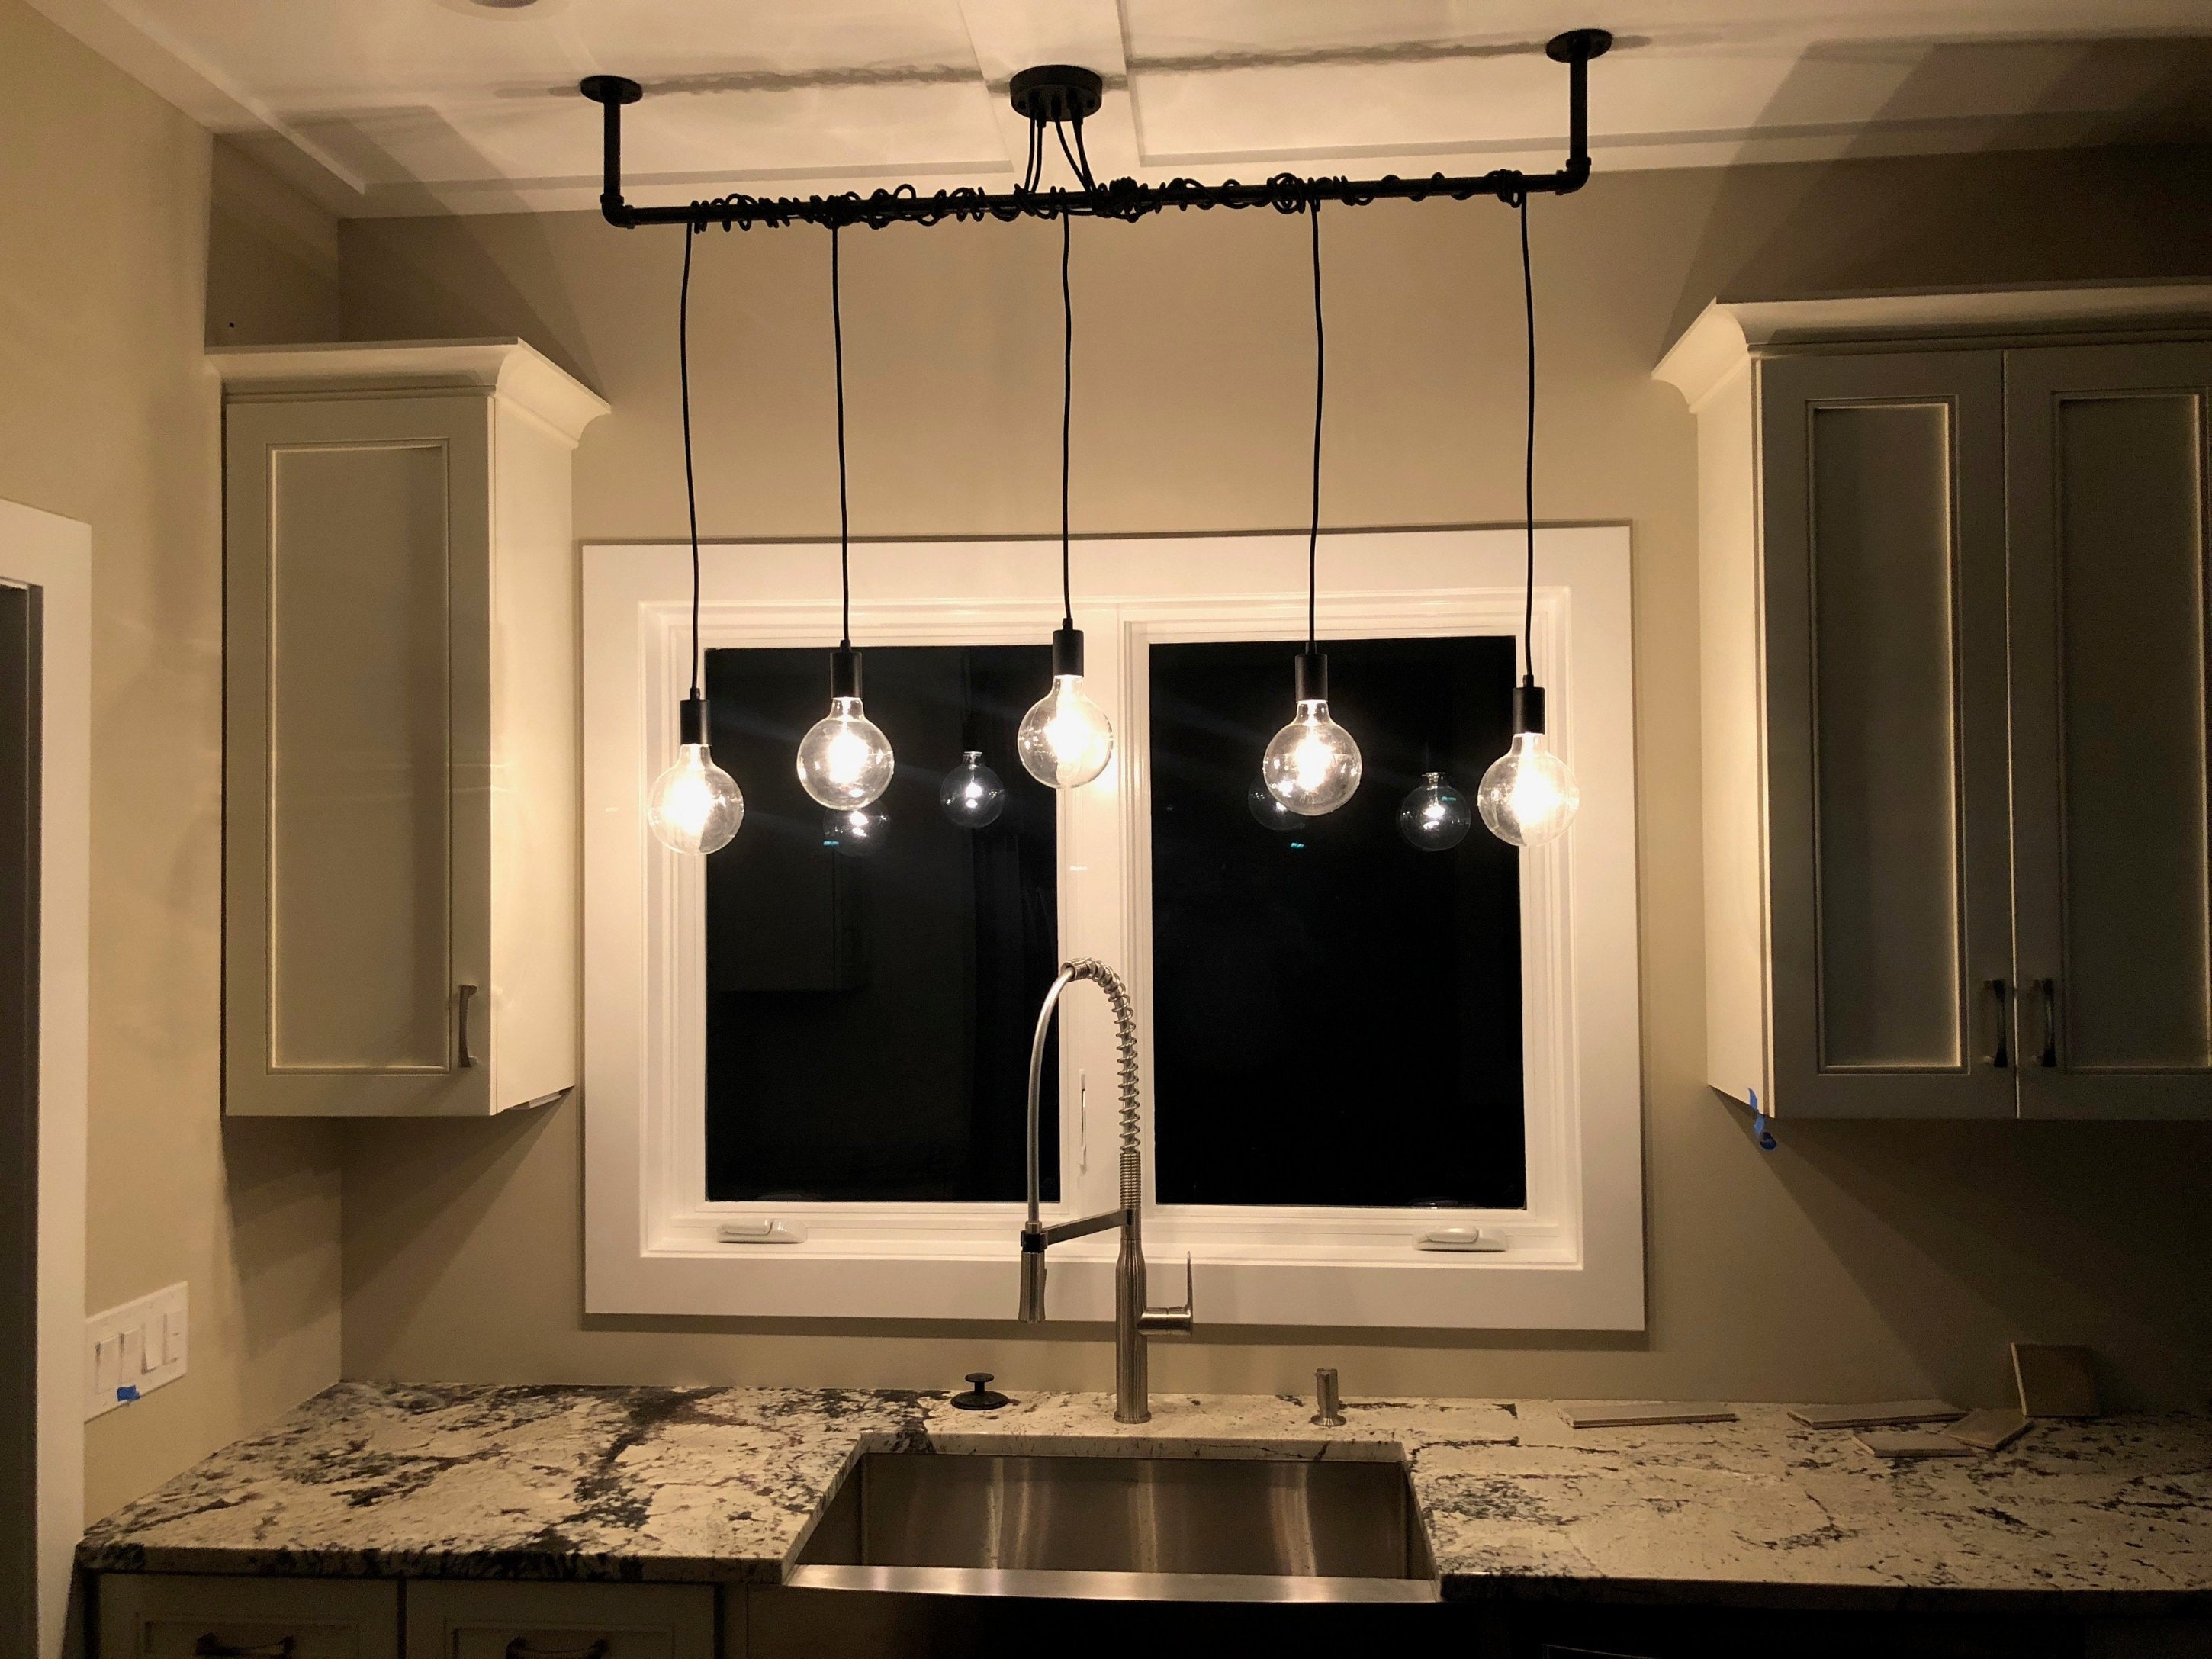 drum pendant lighting over kitchen sink with window